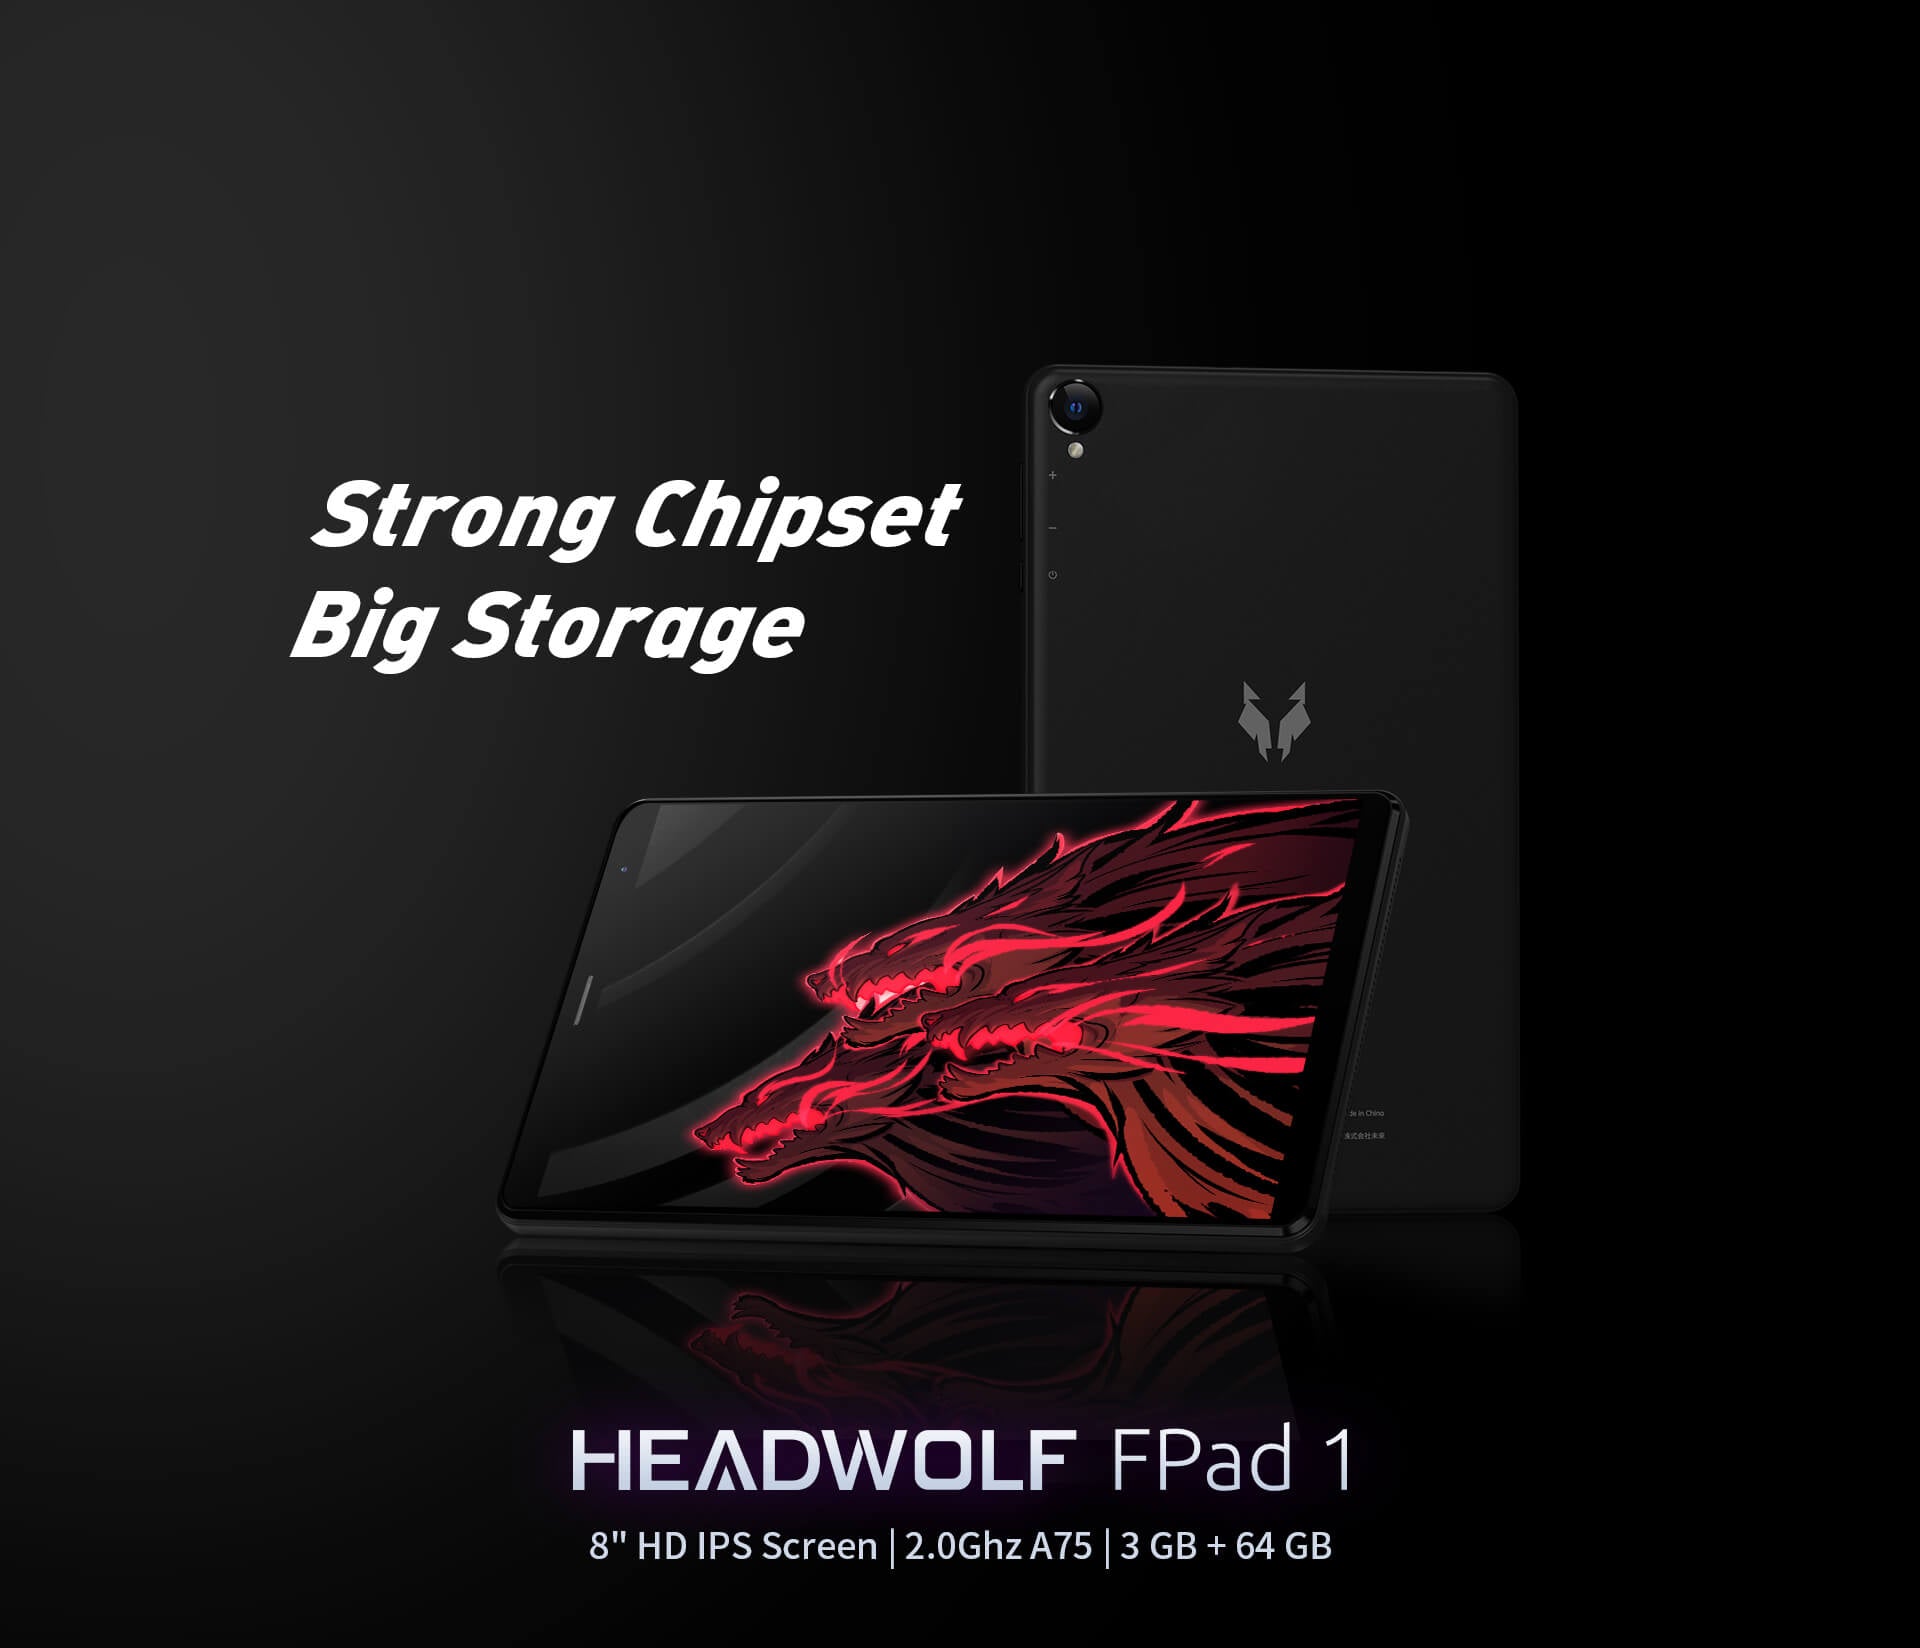 Headwolf FPad 1 - Strong Chipset Big Storage